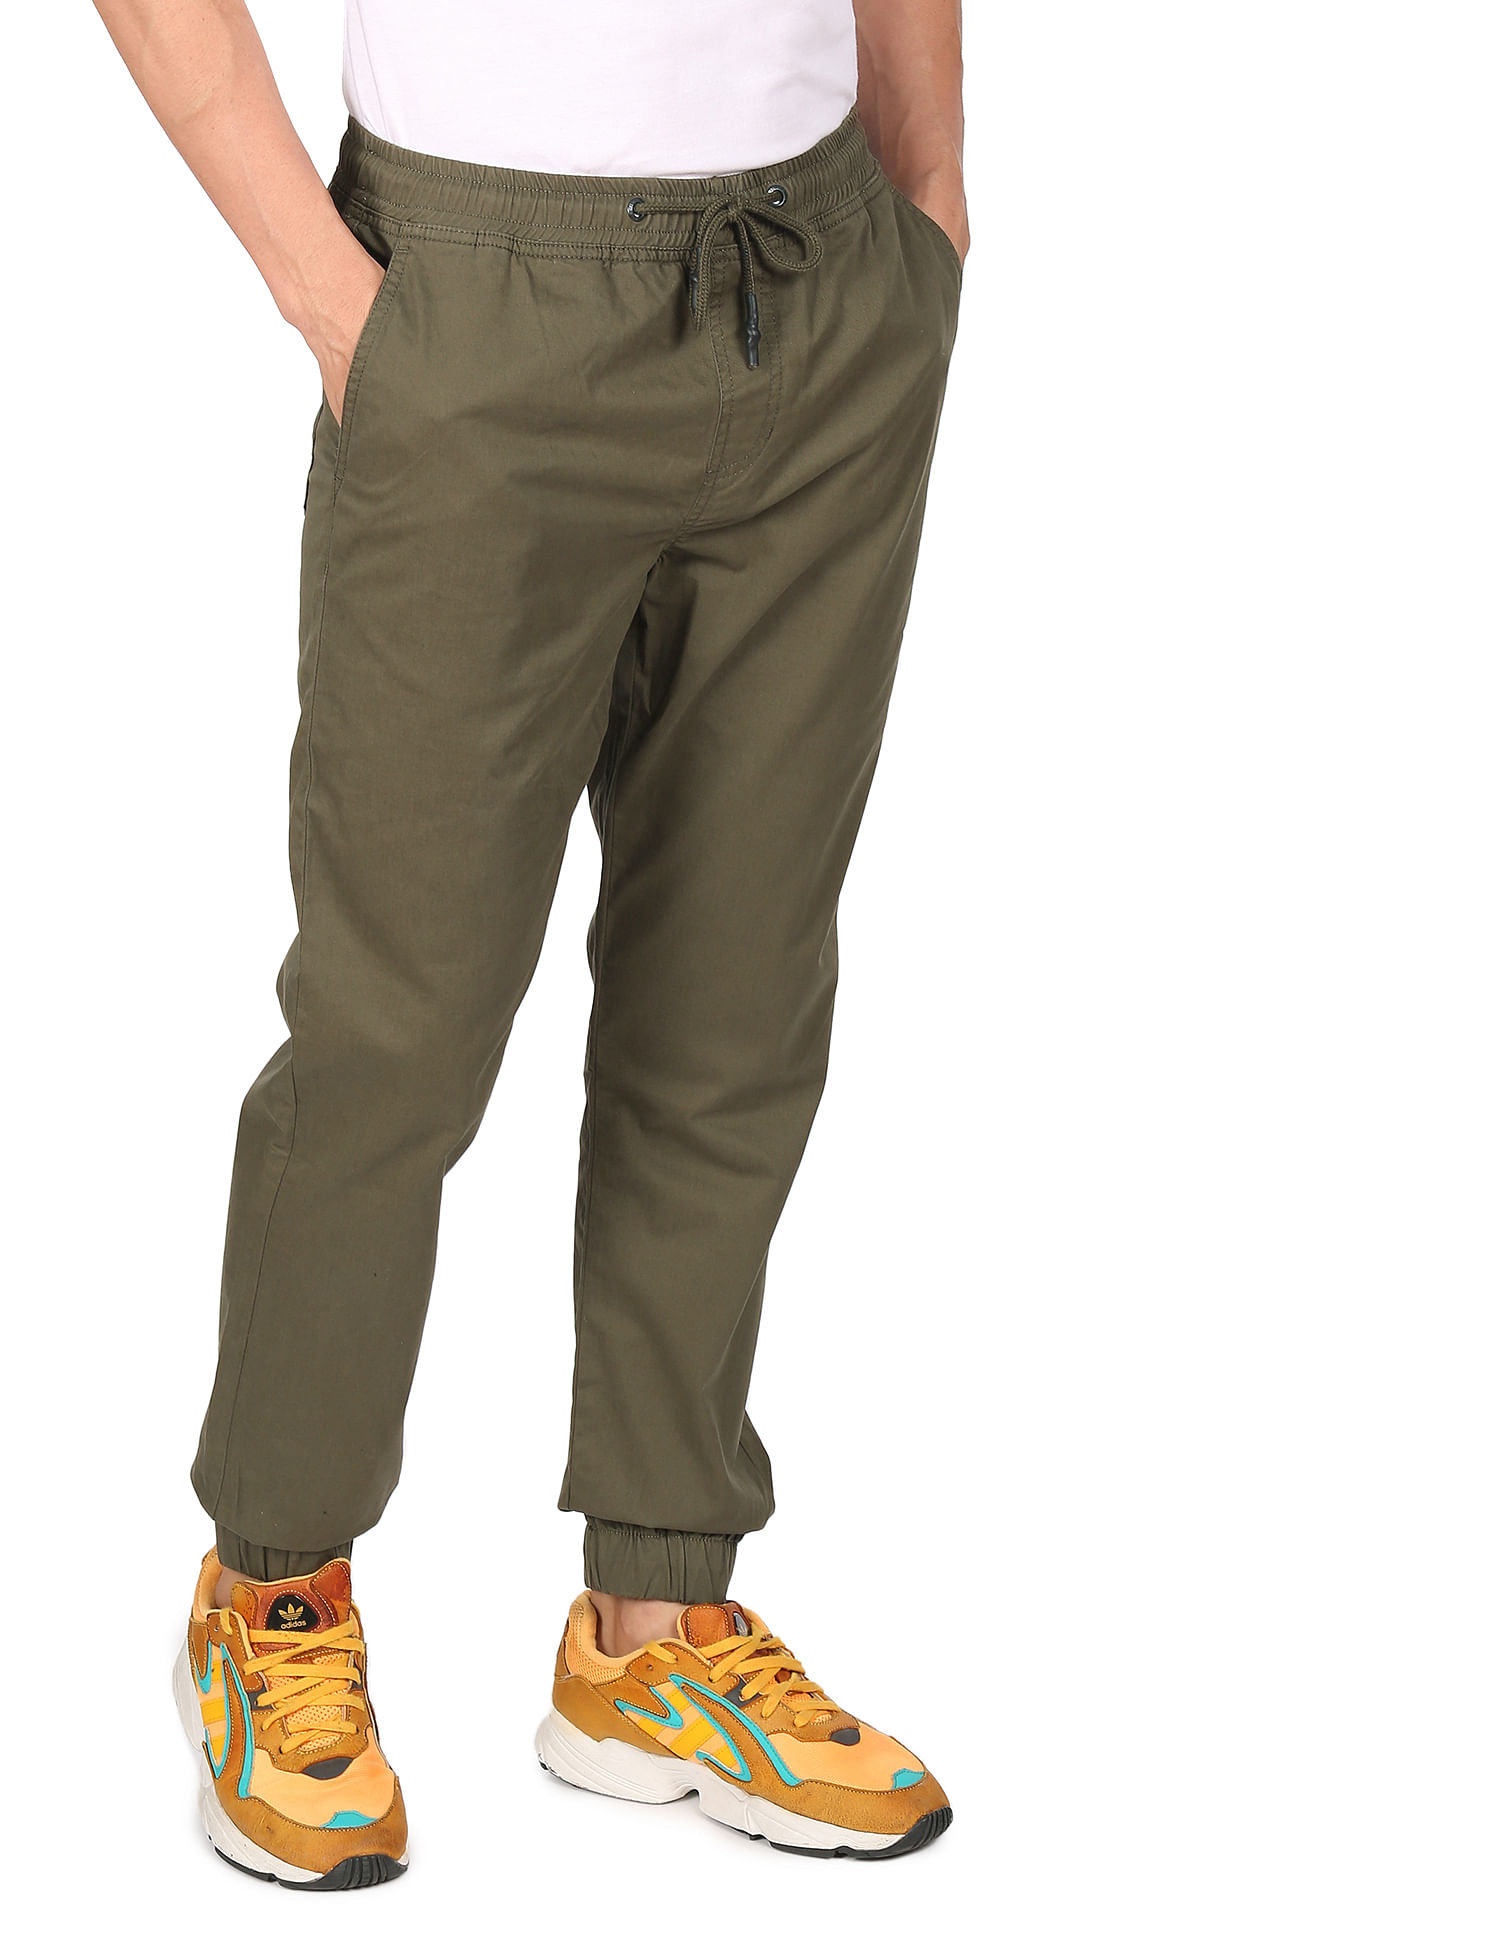 Buy Khaki Trousers  Pants for Men by Aeropostale Online  Ajiocom